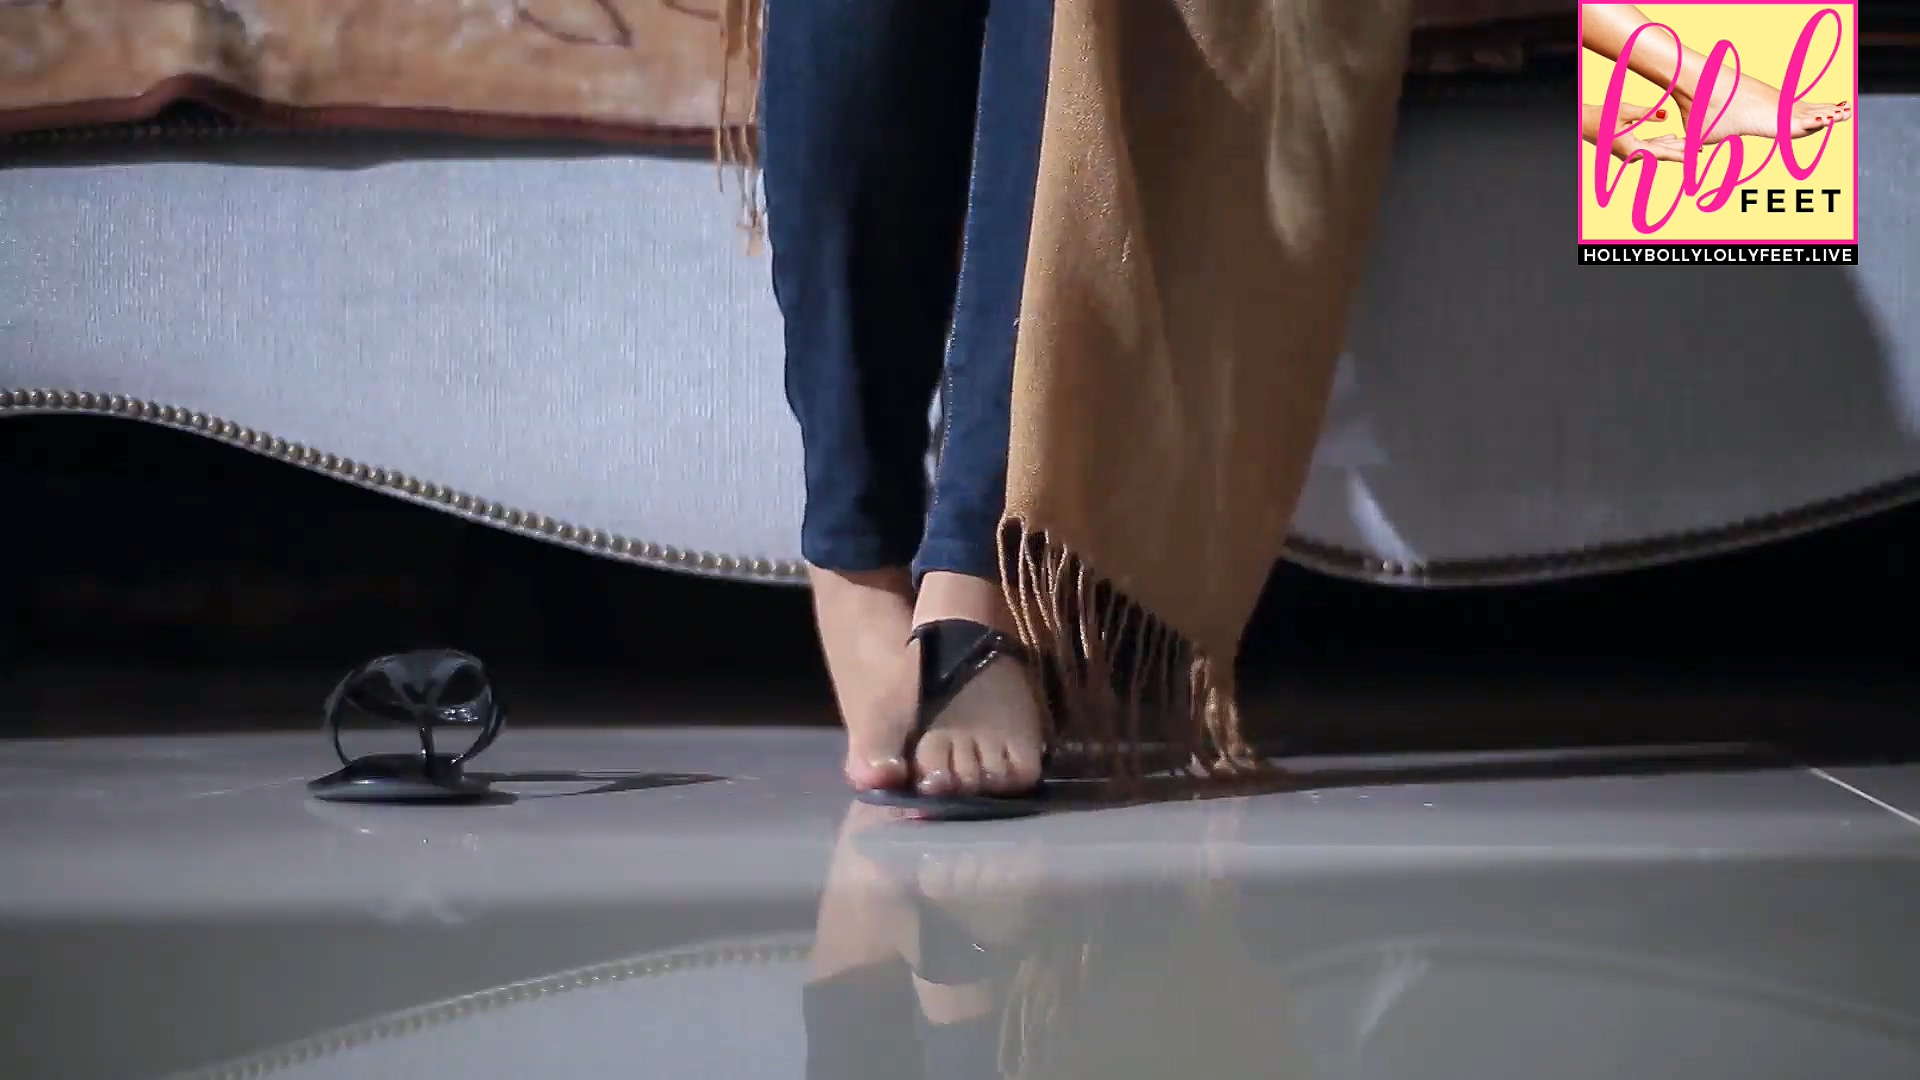 Ayesha Khan Feet Closeup Awesome